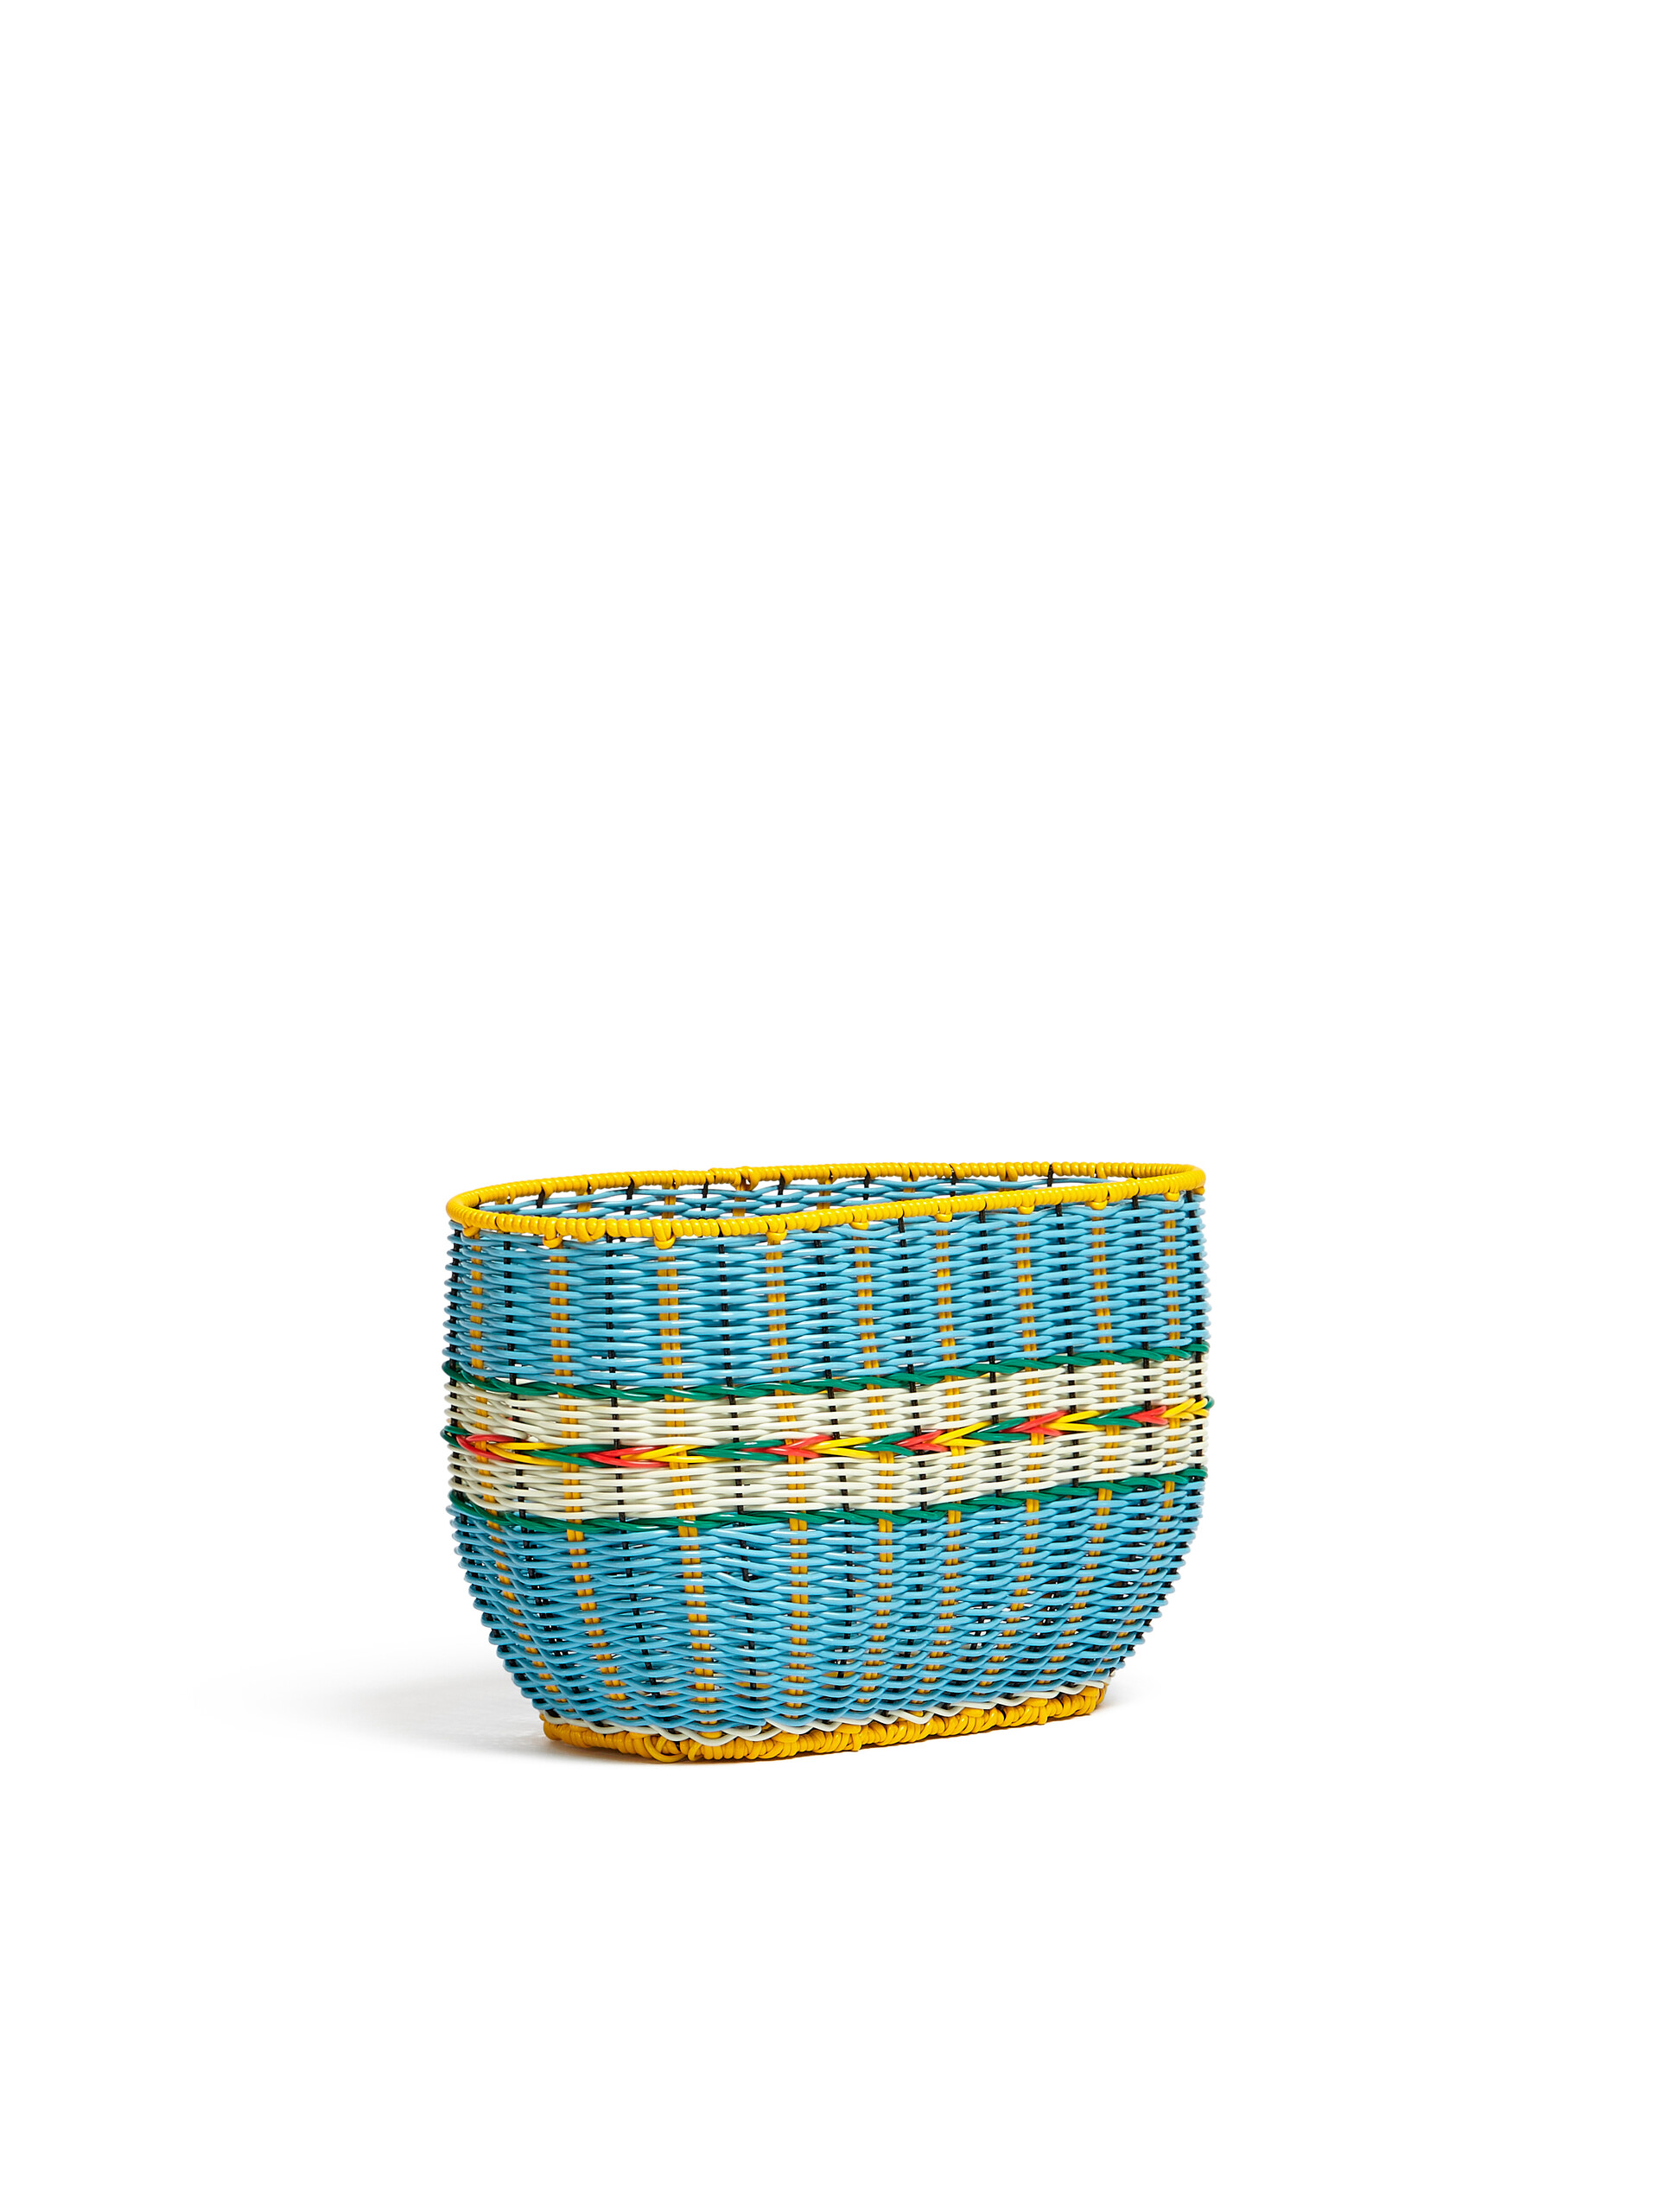 Blue MARNI MARKET oval basket - Accessories - Image 2